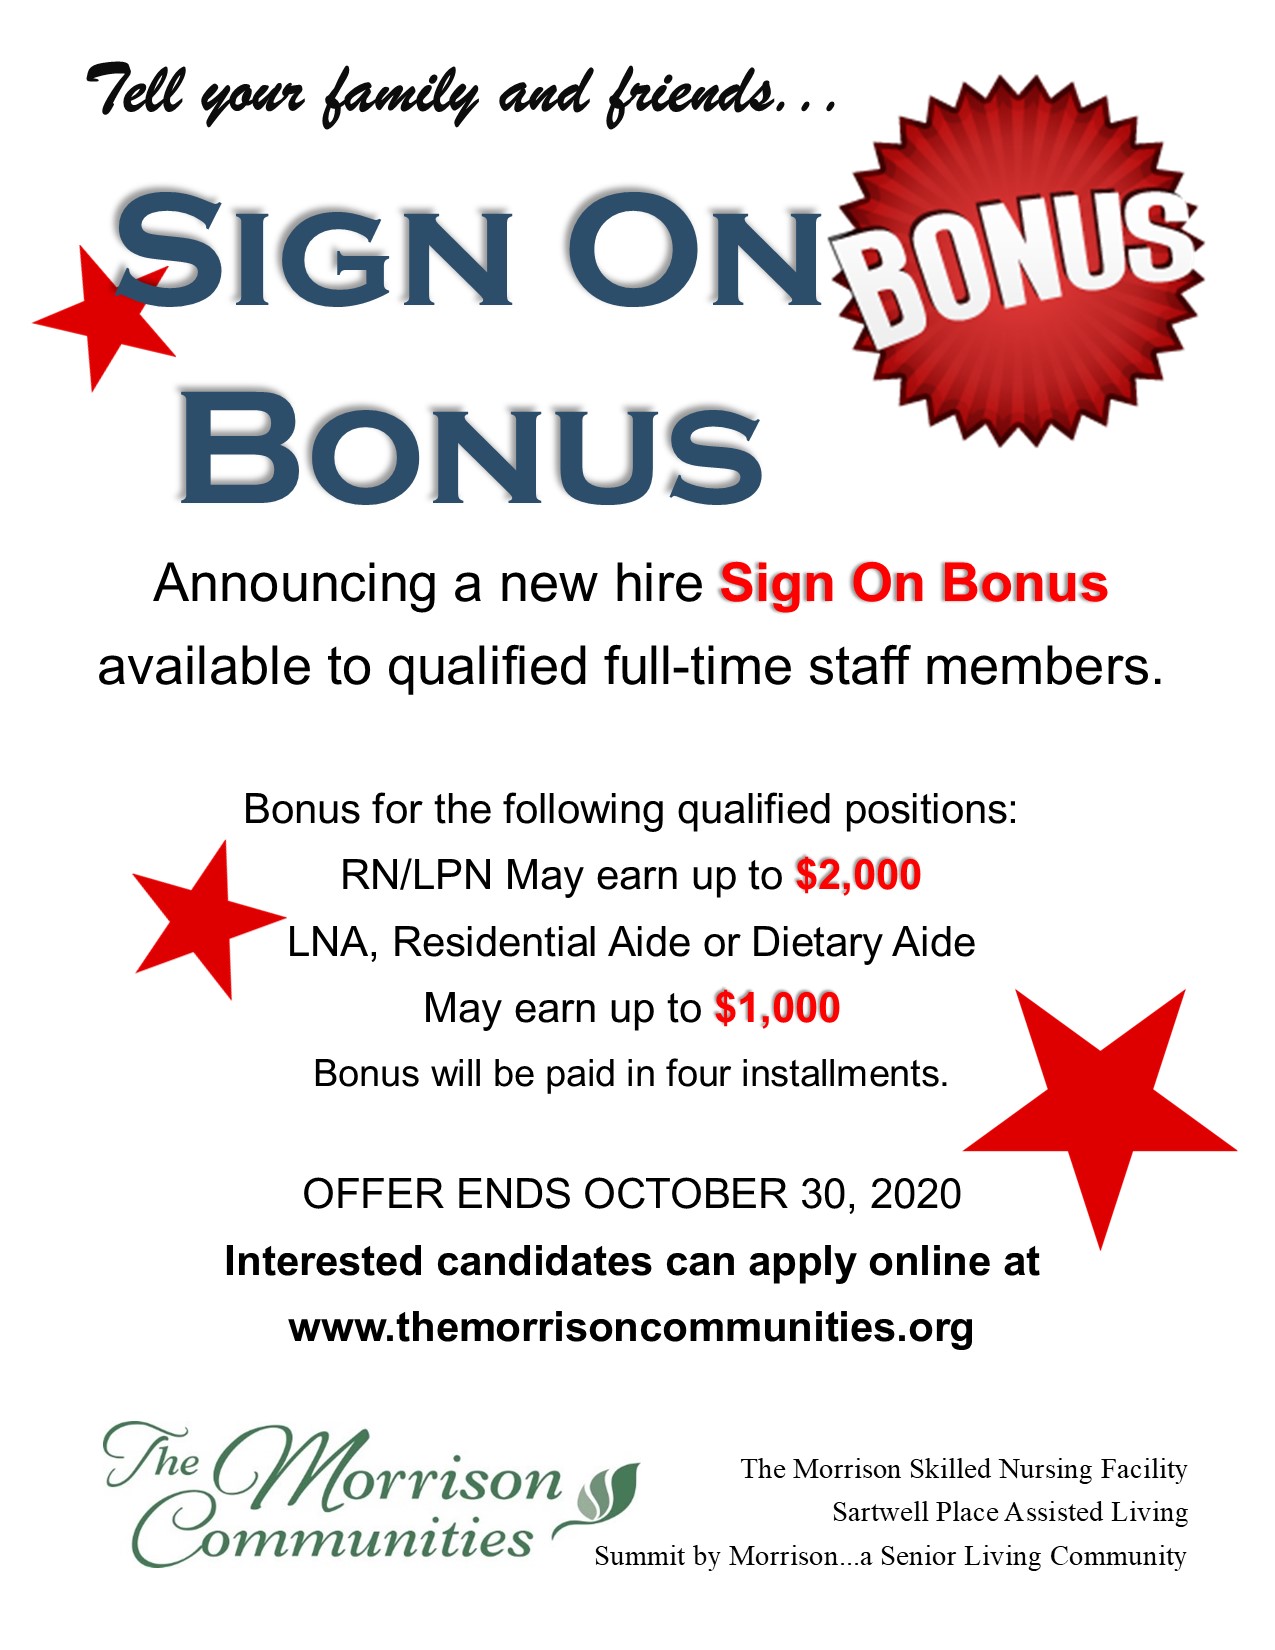 Las vegas nursing jobs sign on bonus